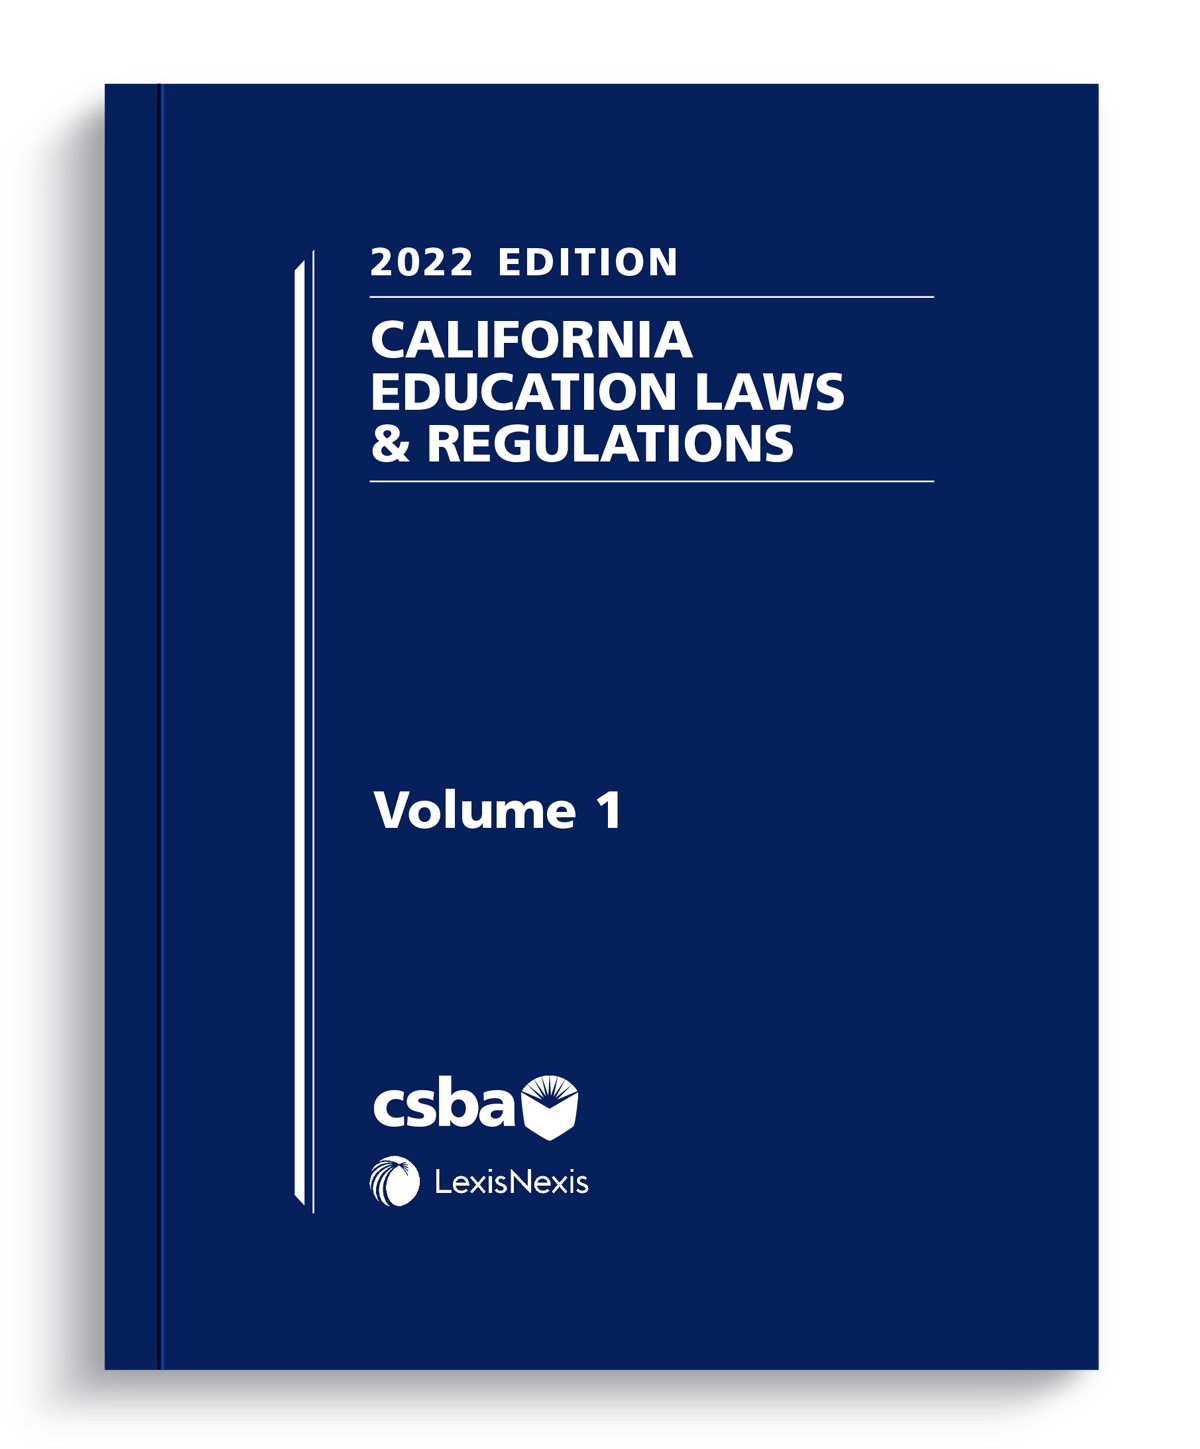 "California Education Laws & Regulations" book cover